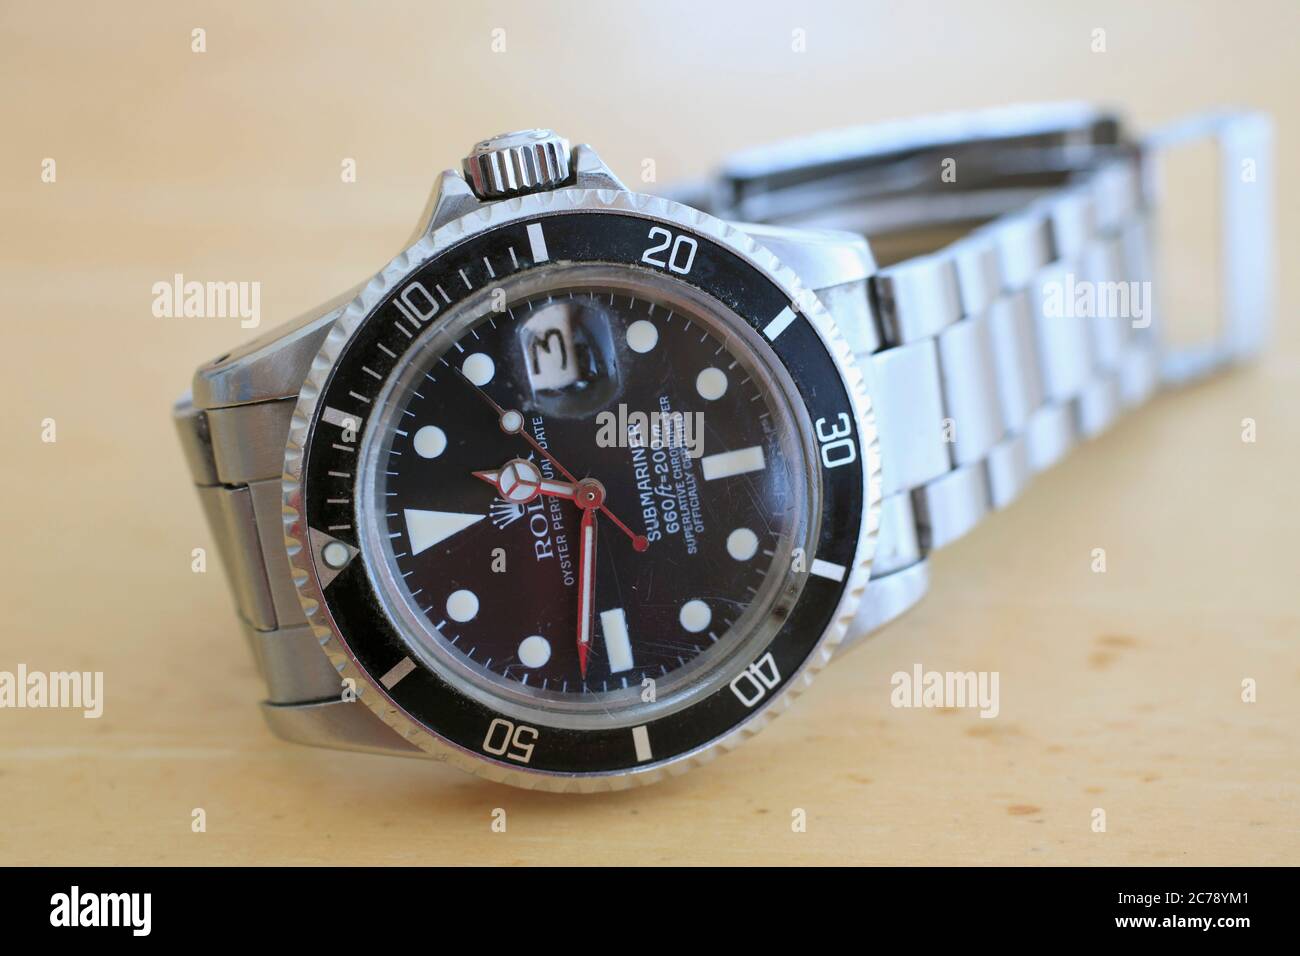 Rolex watch, Submariner, Stock Photo